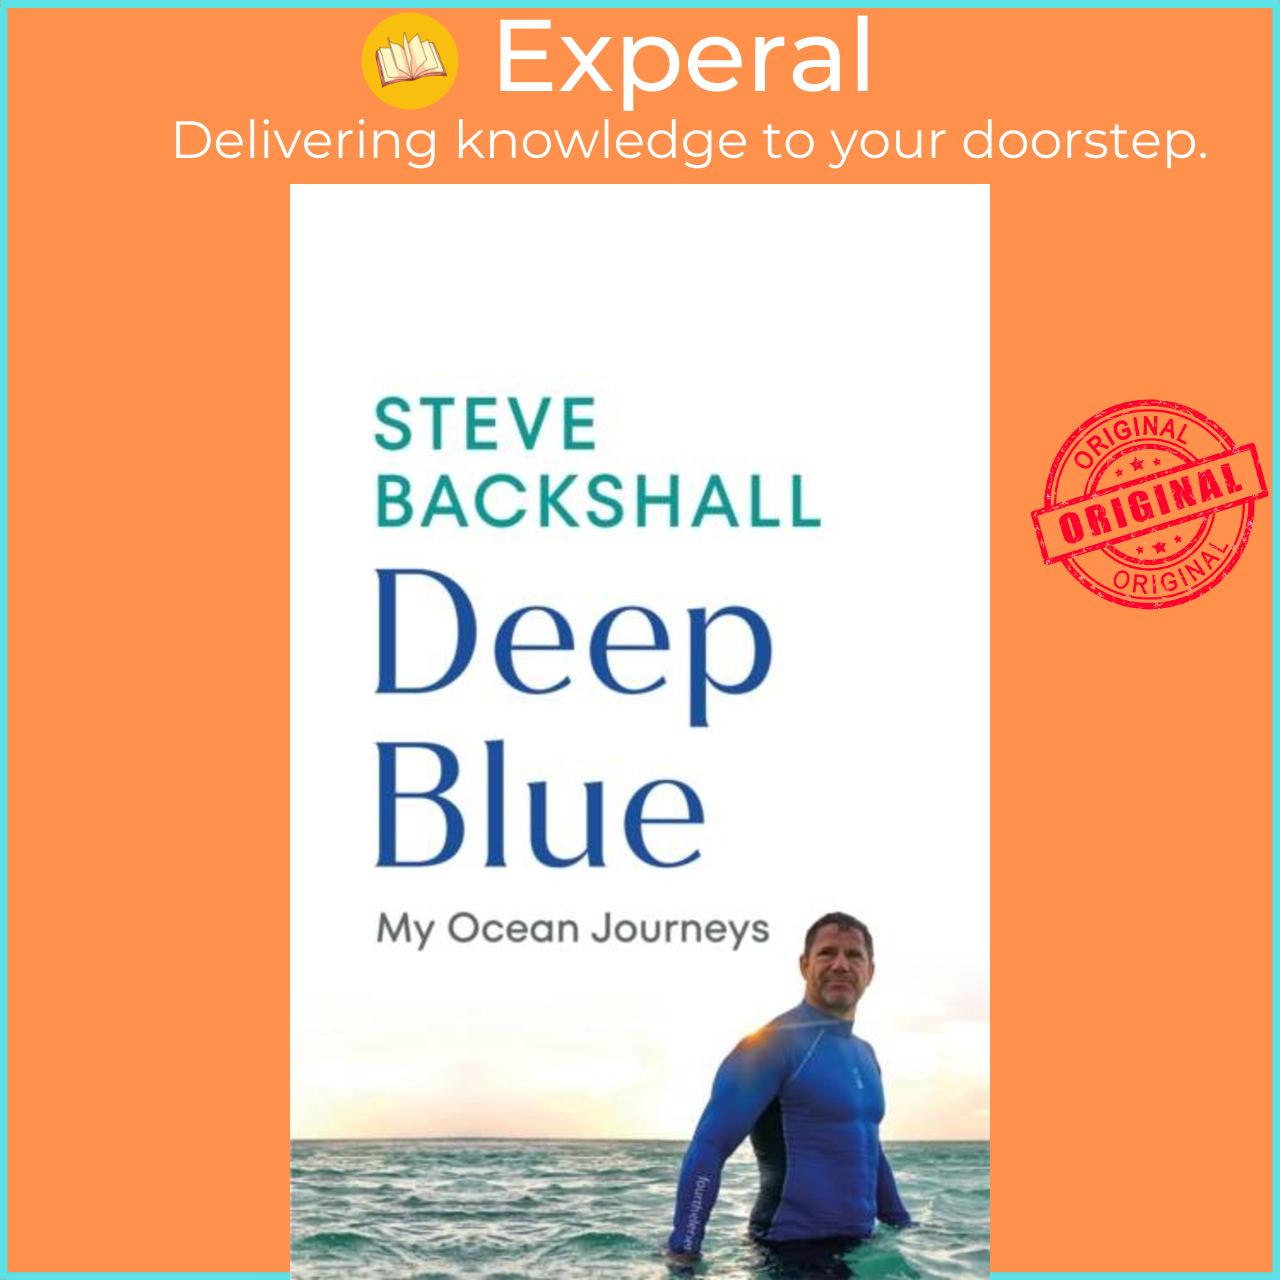 Sách - Deep Blue - My Ocean Journeys by Steve Backshall (UK edition, hardcover)